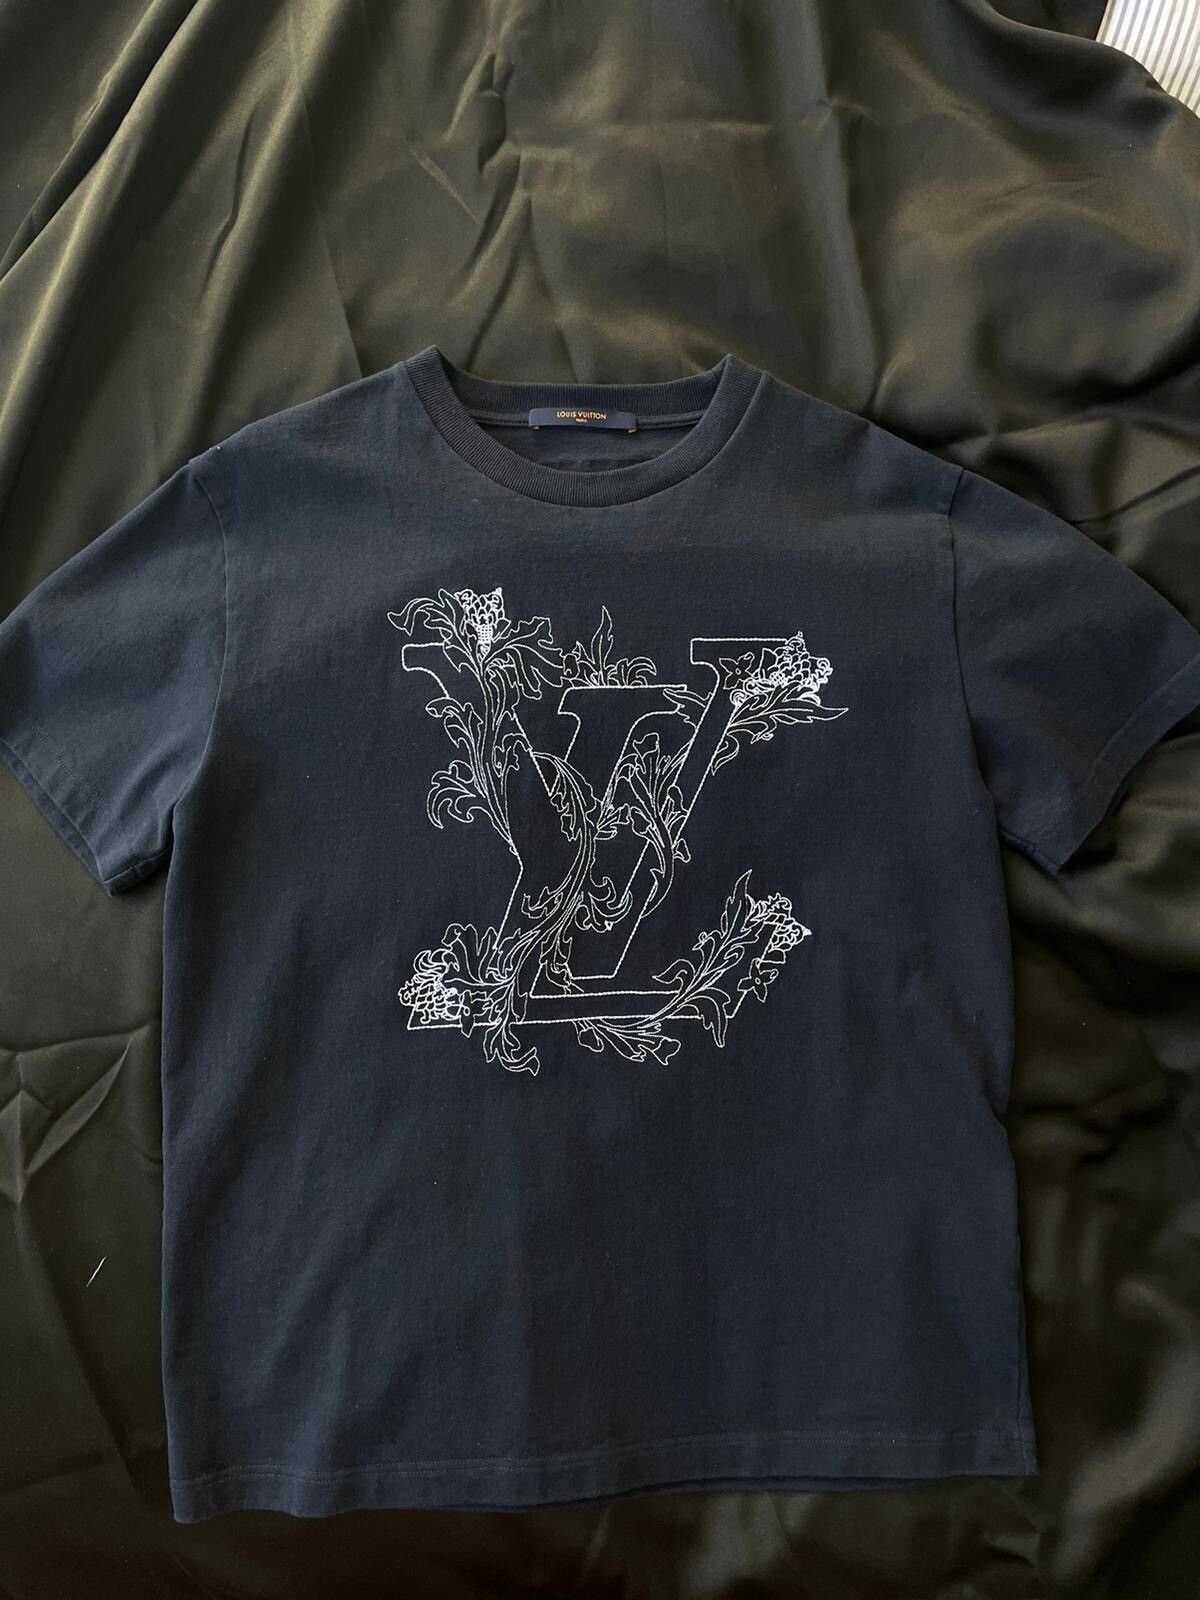 Cheap Florish Louis Vuitton Logo T Shirt, Lv Shirt Women - Anynee